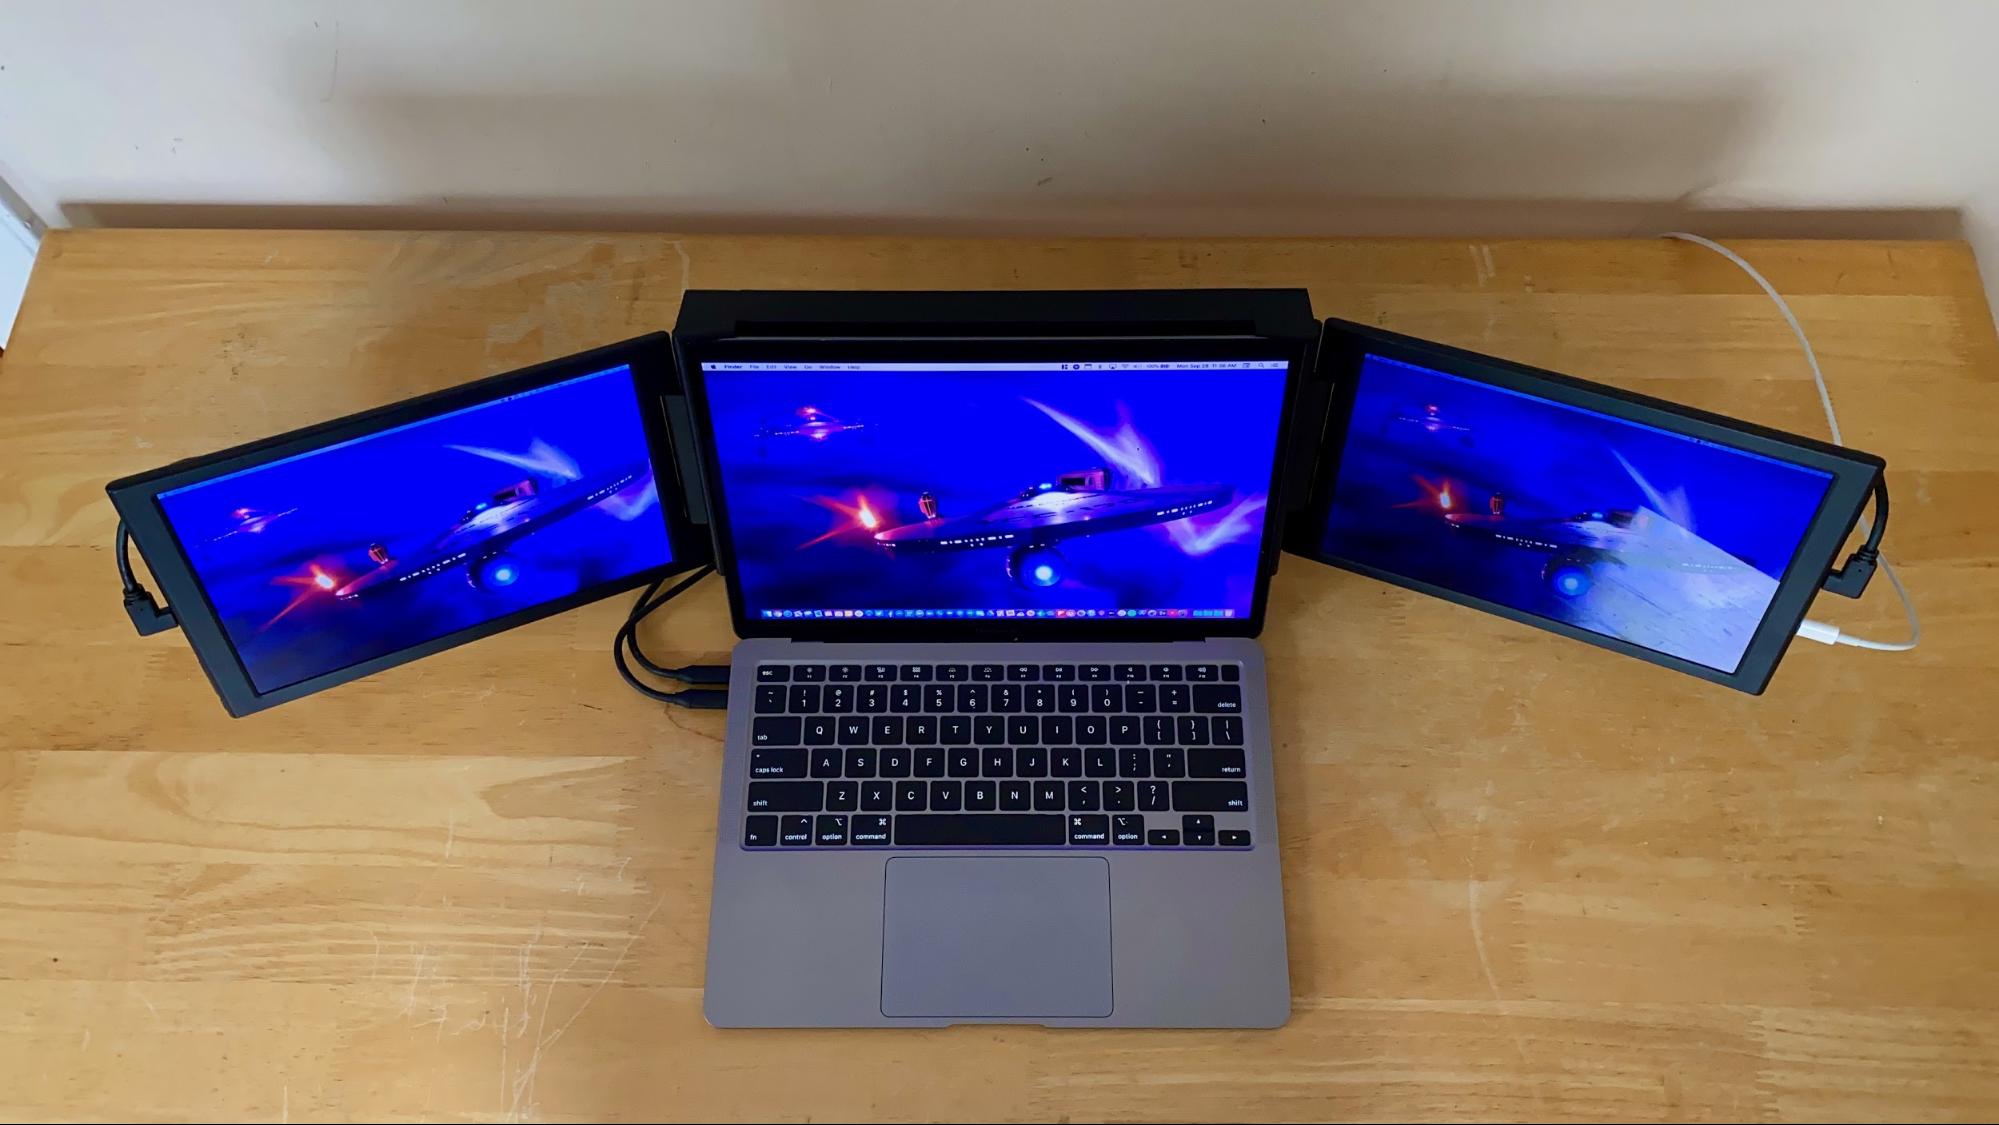 Xebec's Tri-Screen Attaches Extra Screens to a MacBook - TidBITS